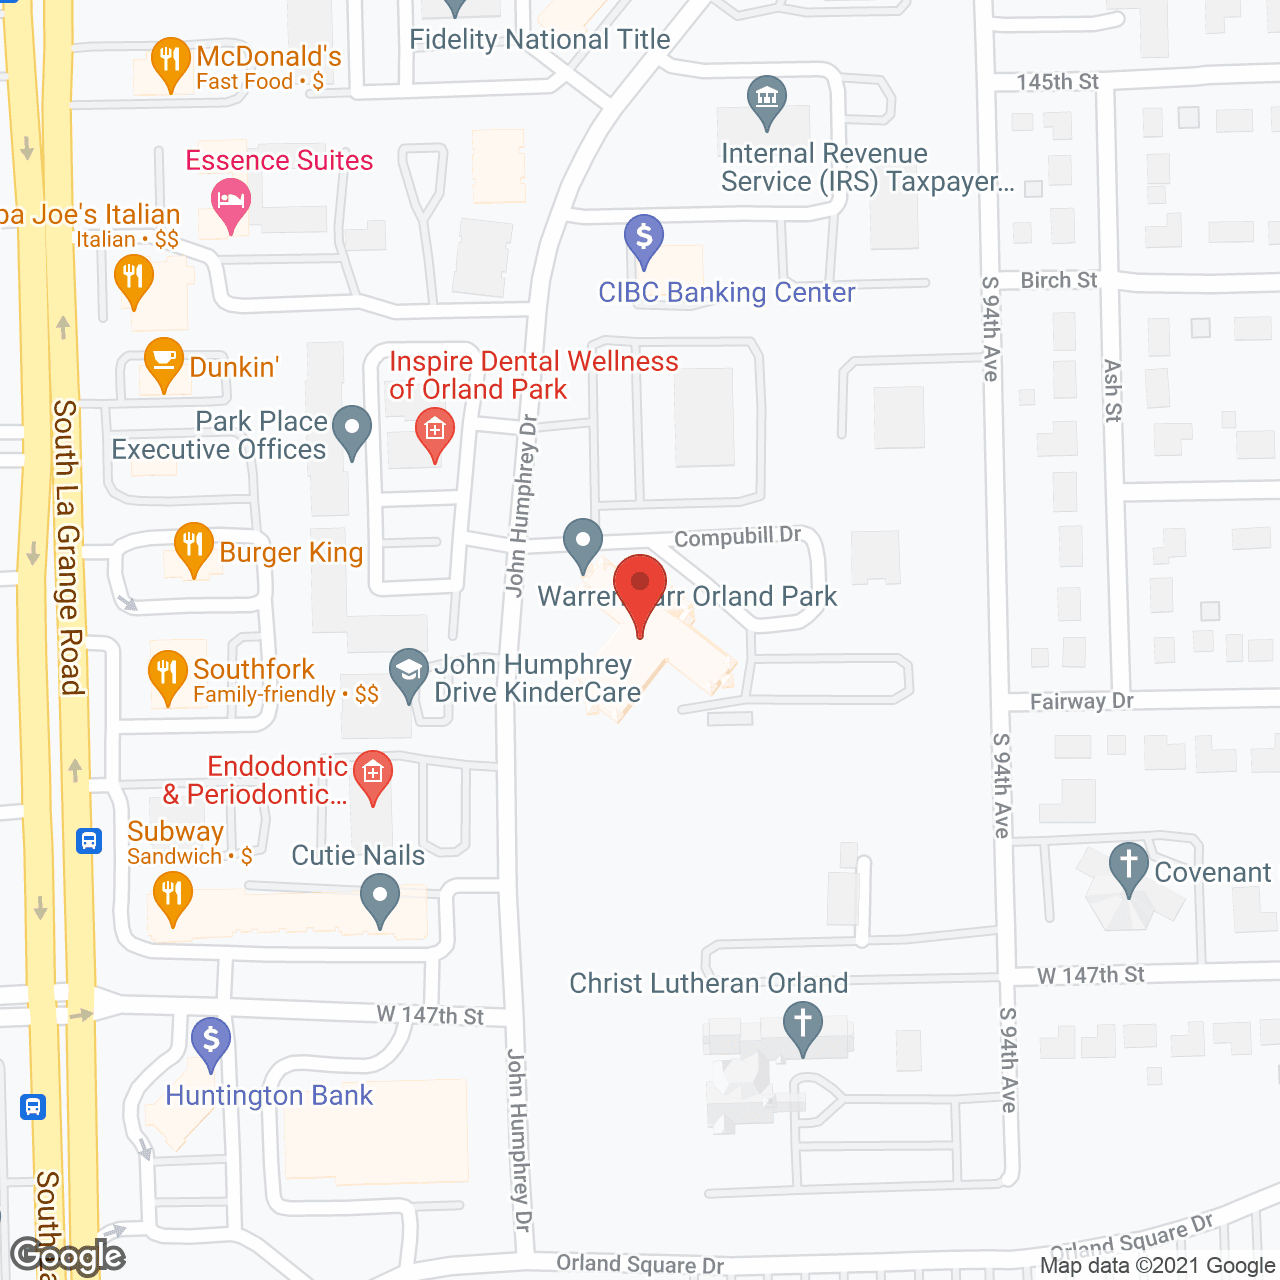 Warren Bar of Orland Park in google map